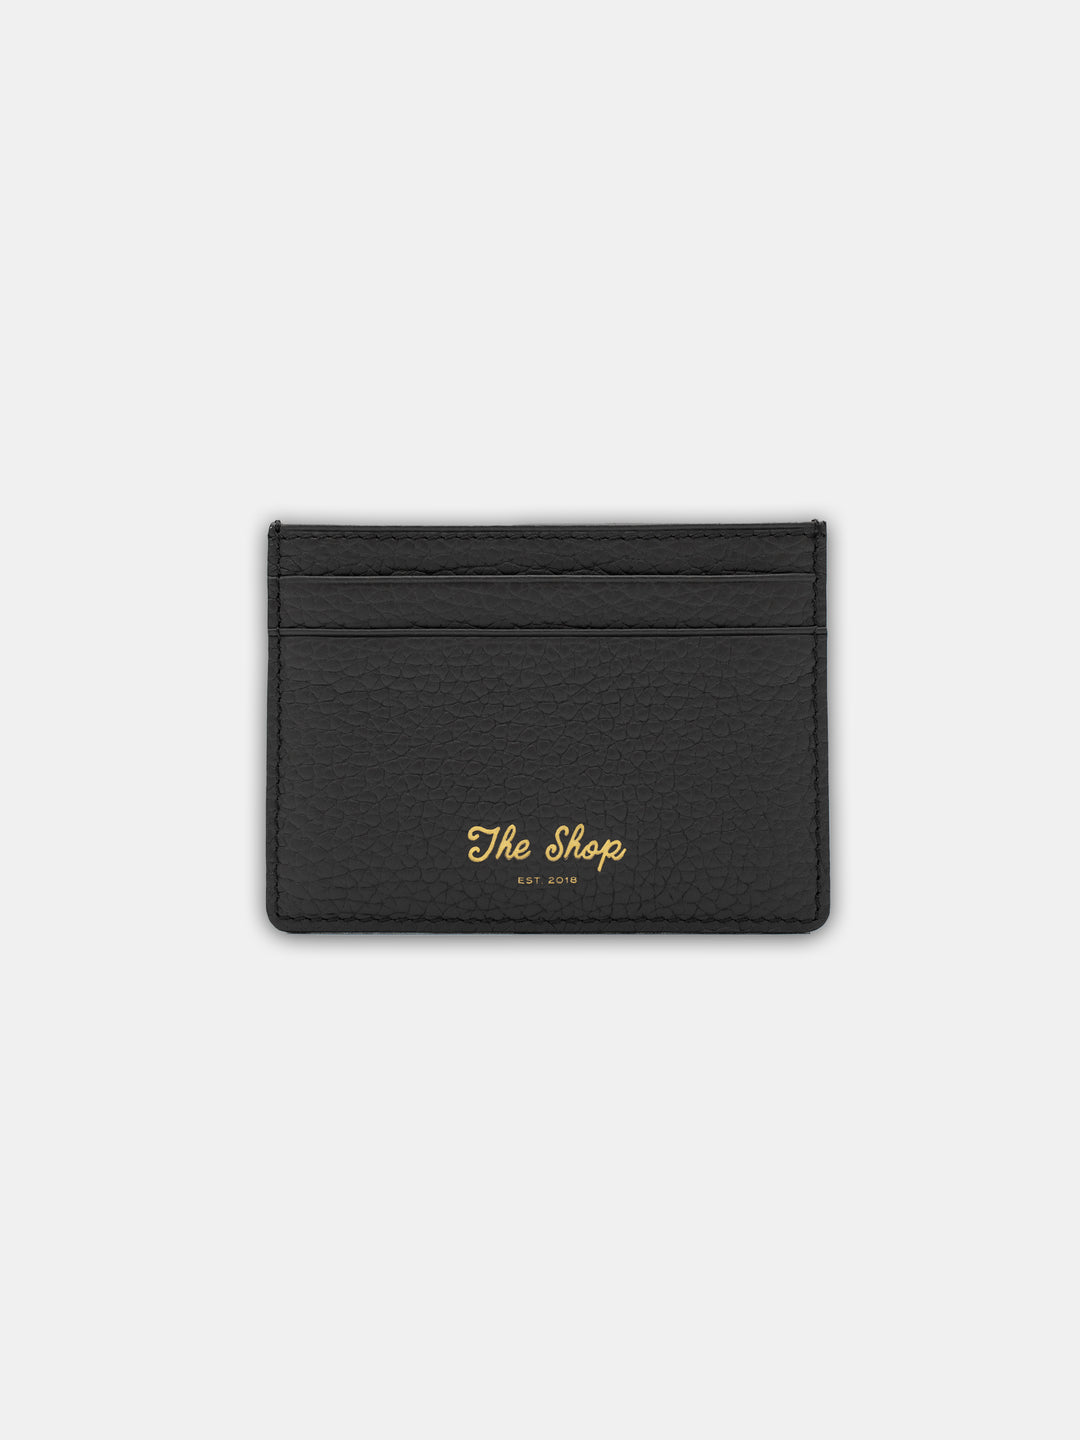 The Shop Leather Card Holder Black - Front